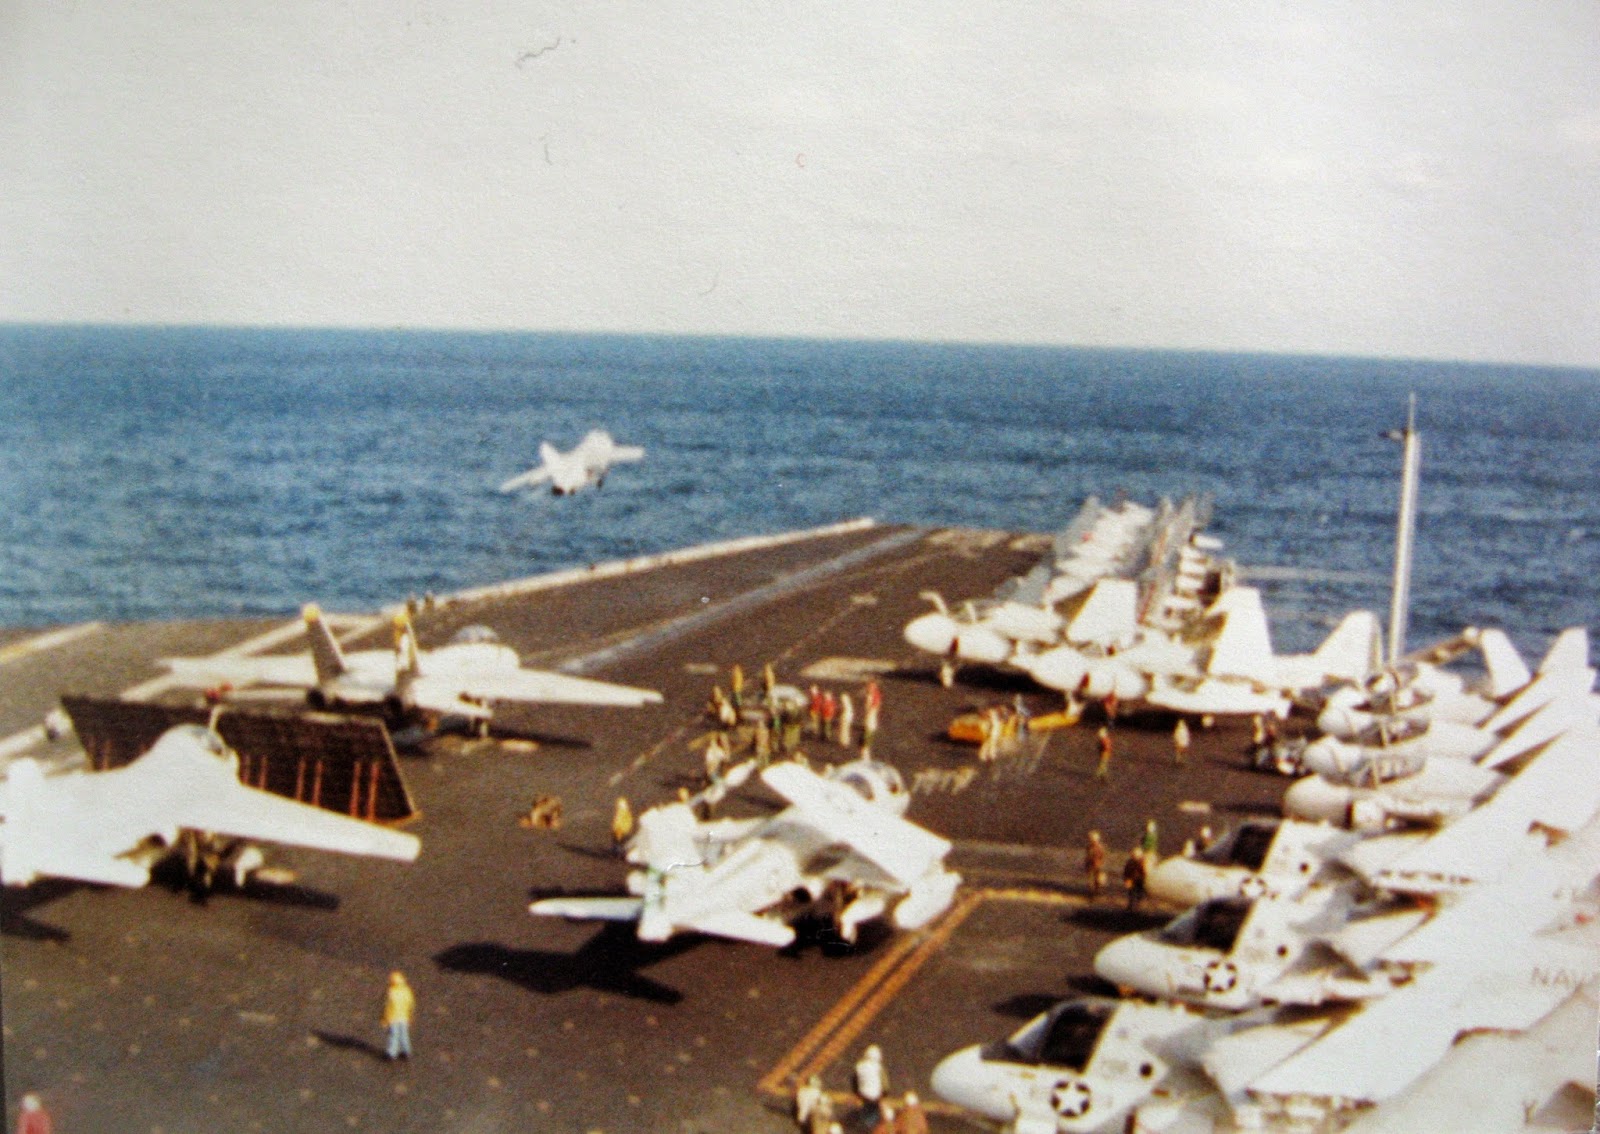 Tommy Mondello watching flight ops USS Nimitz January 1983 Mediterranean Sea